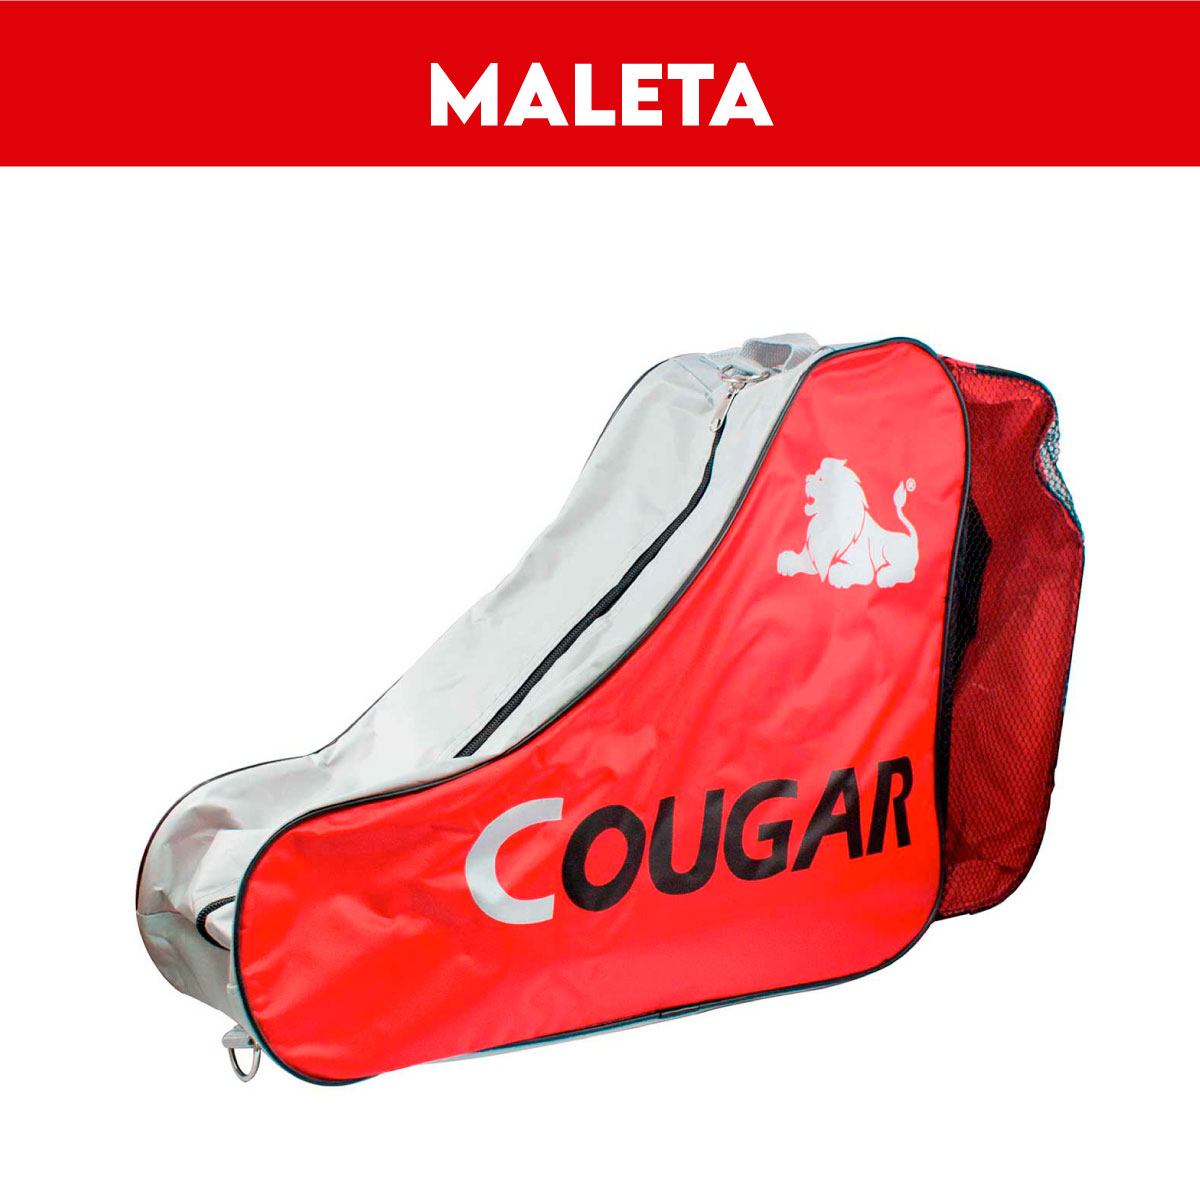 Maleta patines Cougar Cougar - Patines Profesionales & Semiprofesionales en Colombia